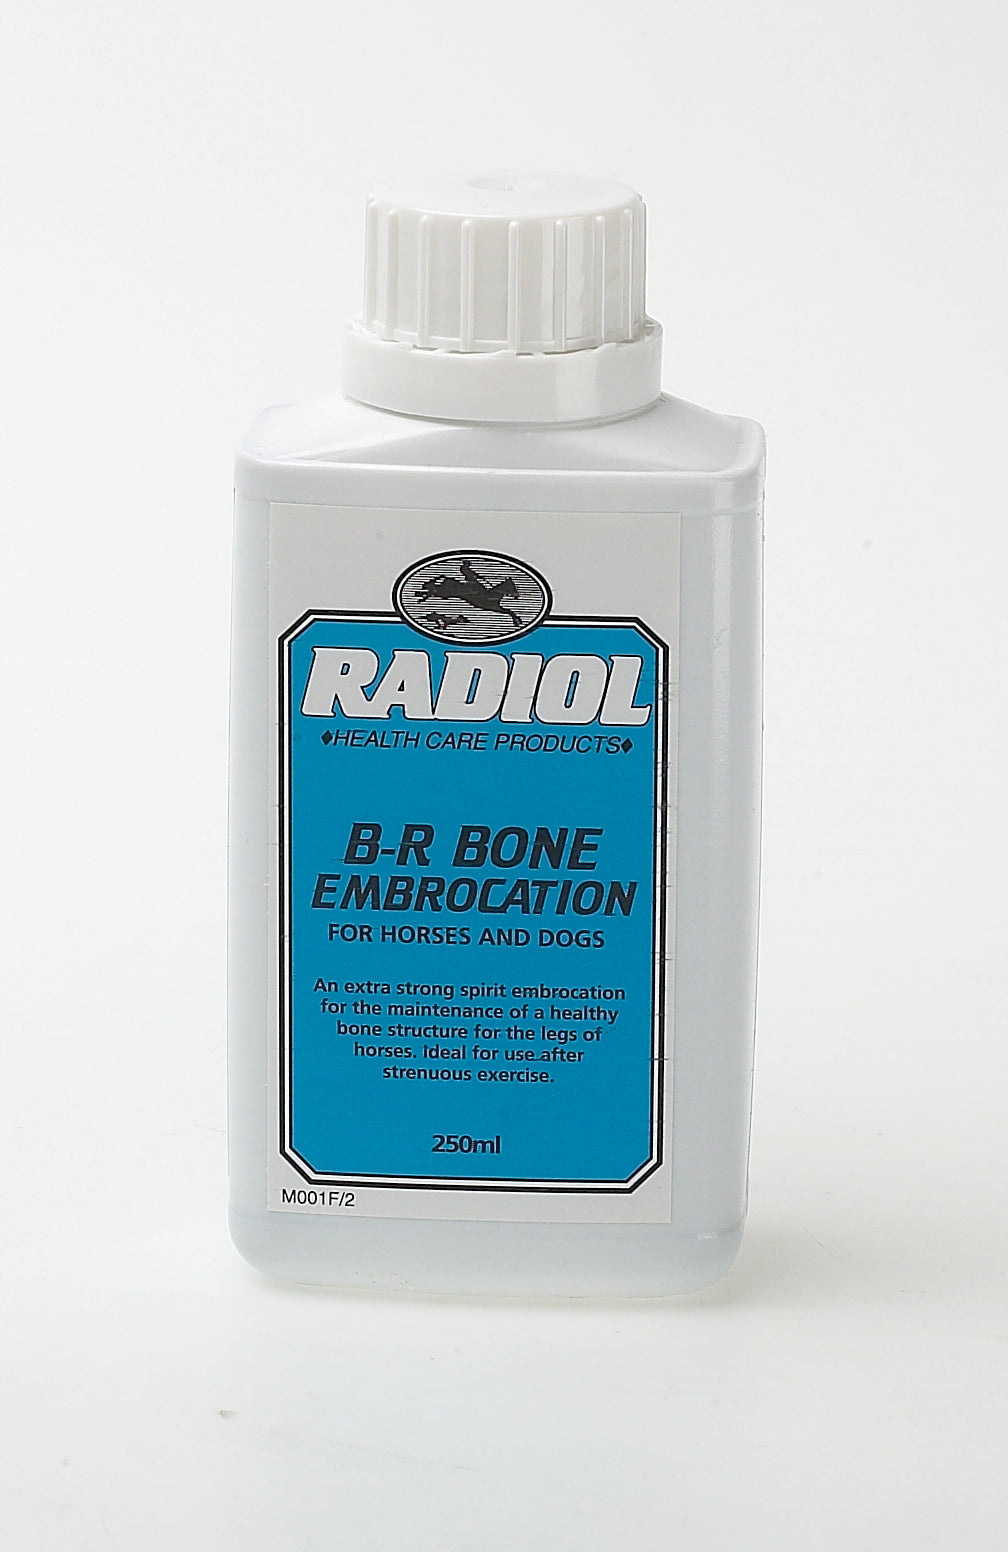 B-R Bone Embrocation